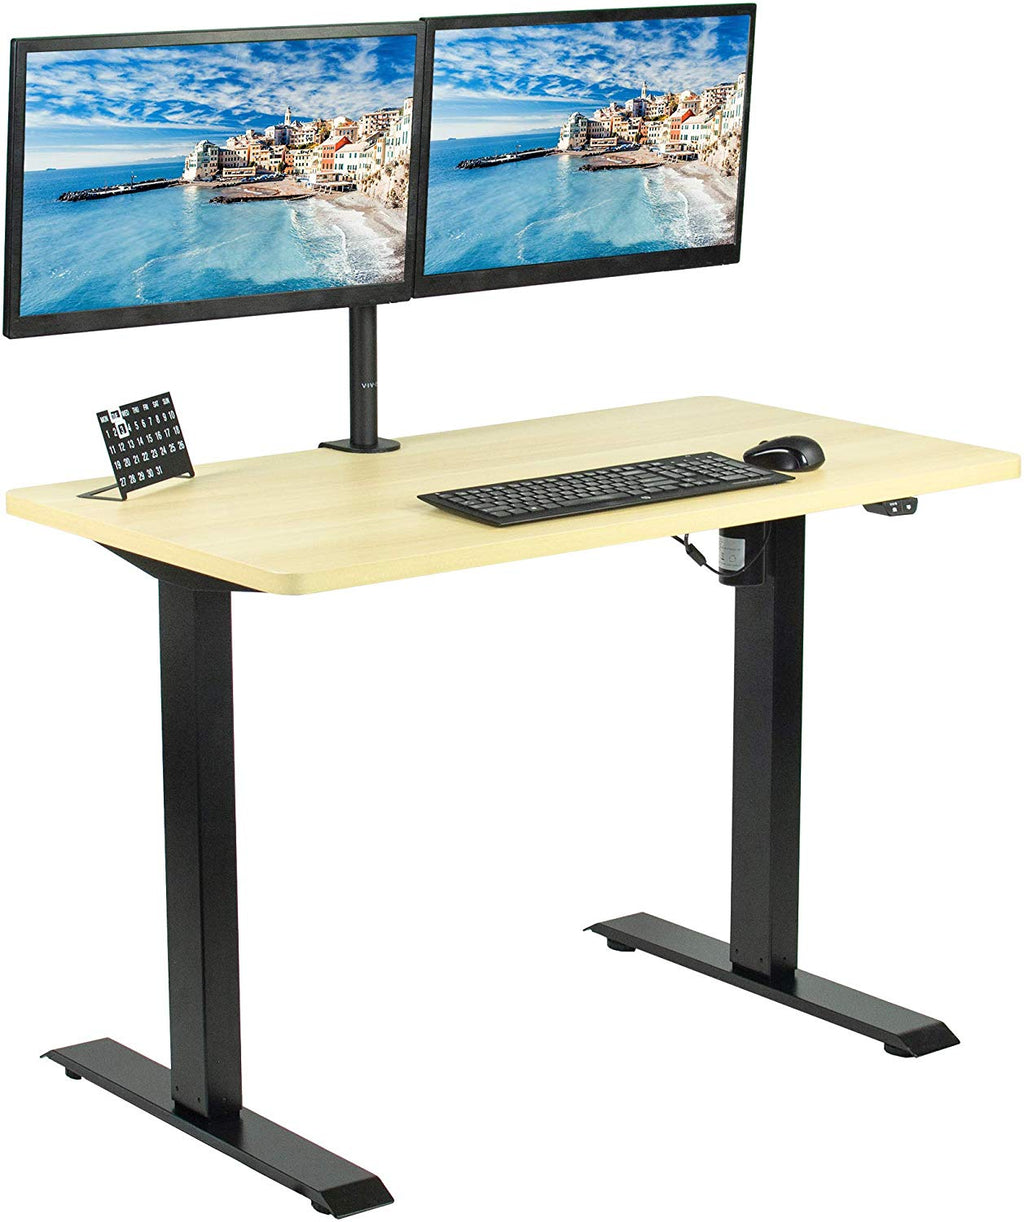 Desk Kit B04clight Wood Black 43 X 24 Electric Desk Vivo